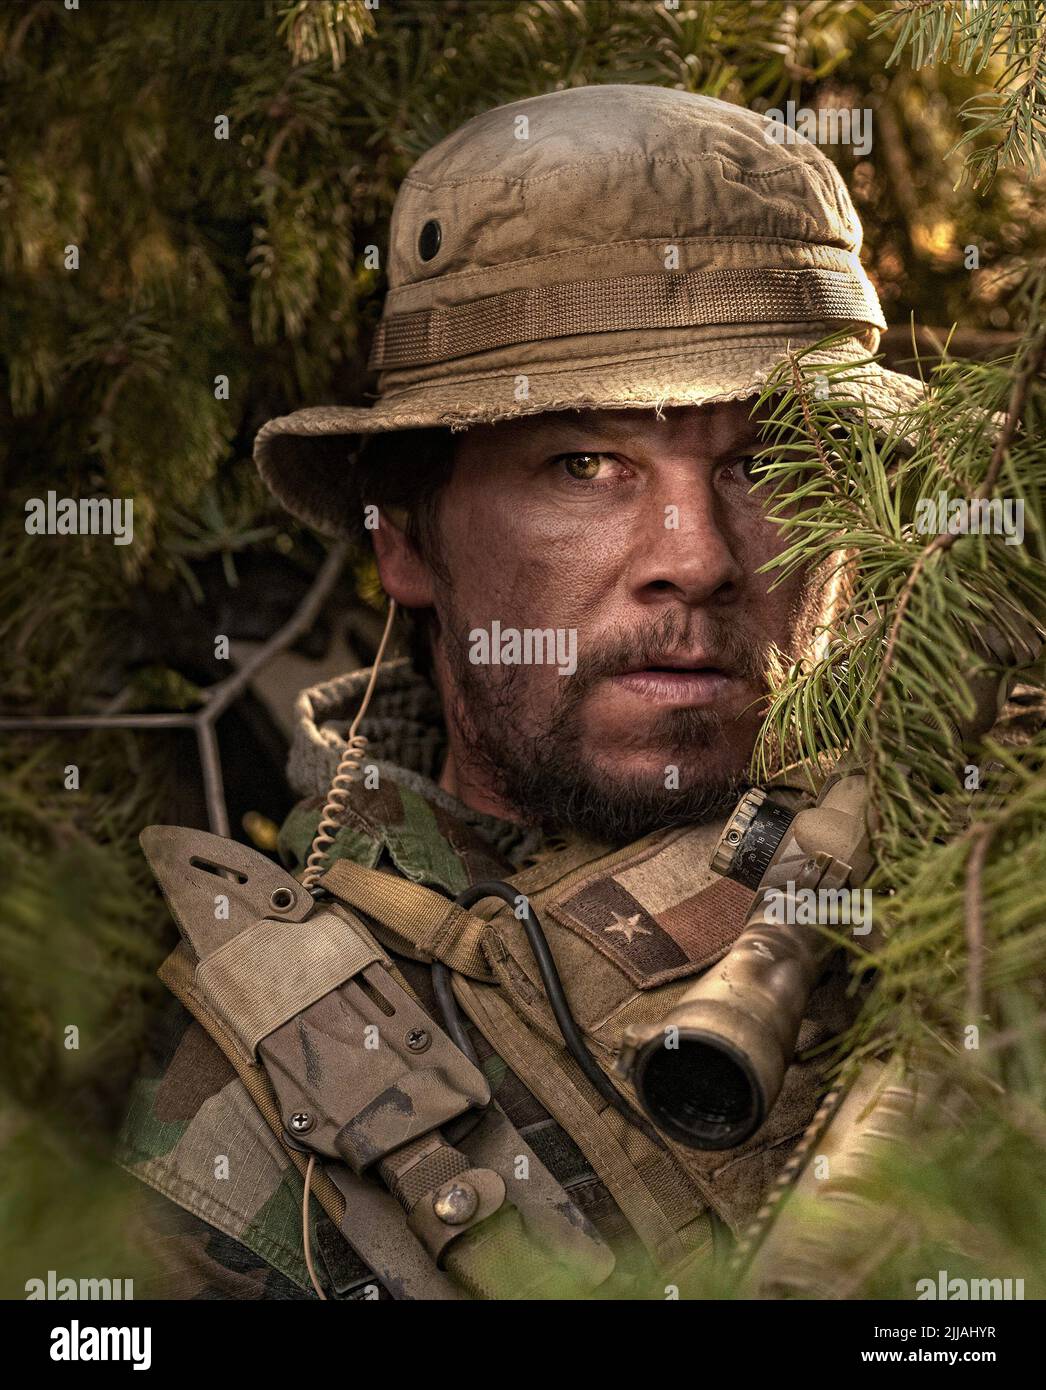 Lone Survivor Official Trailer #1 (2013) - Mark Wahlberg Movie HD 